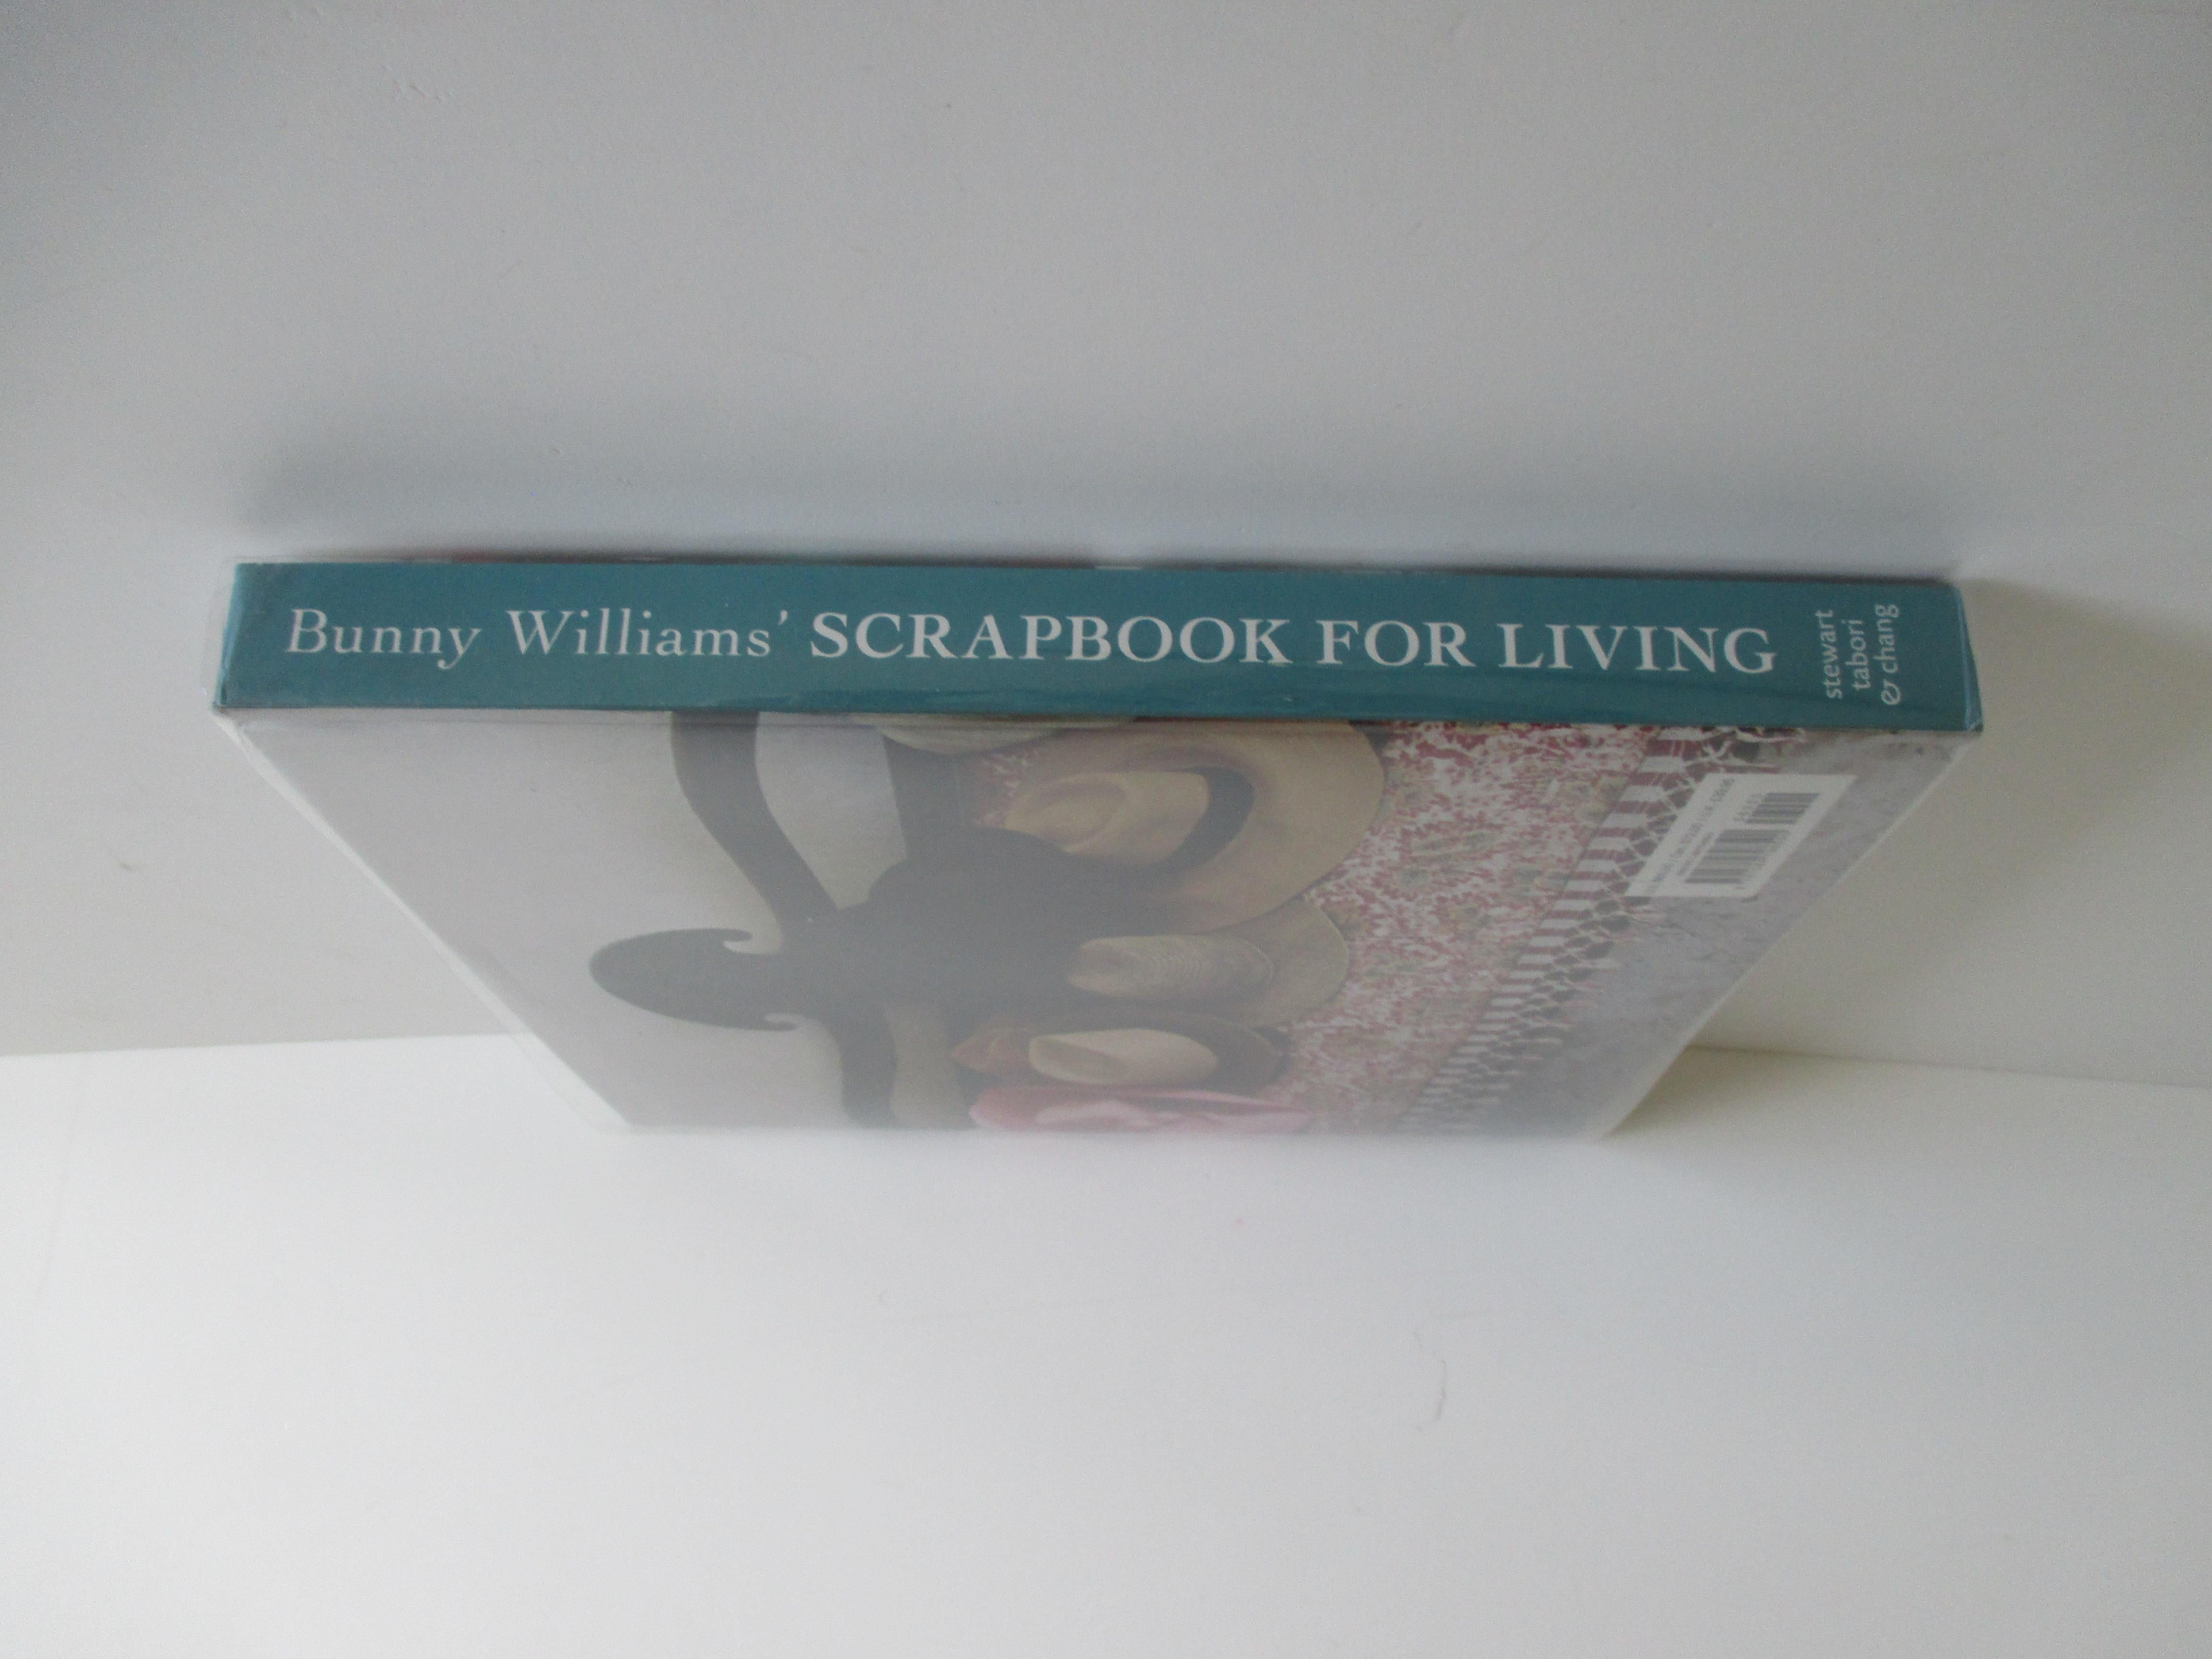 North American Bunny William Scrapbook for Living Hardcover Book